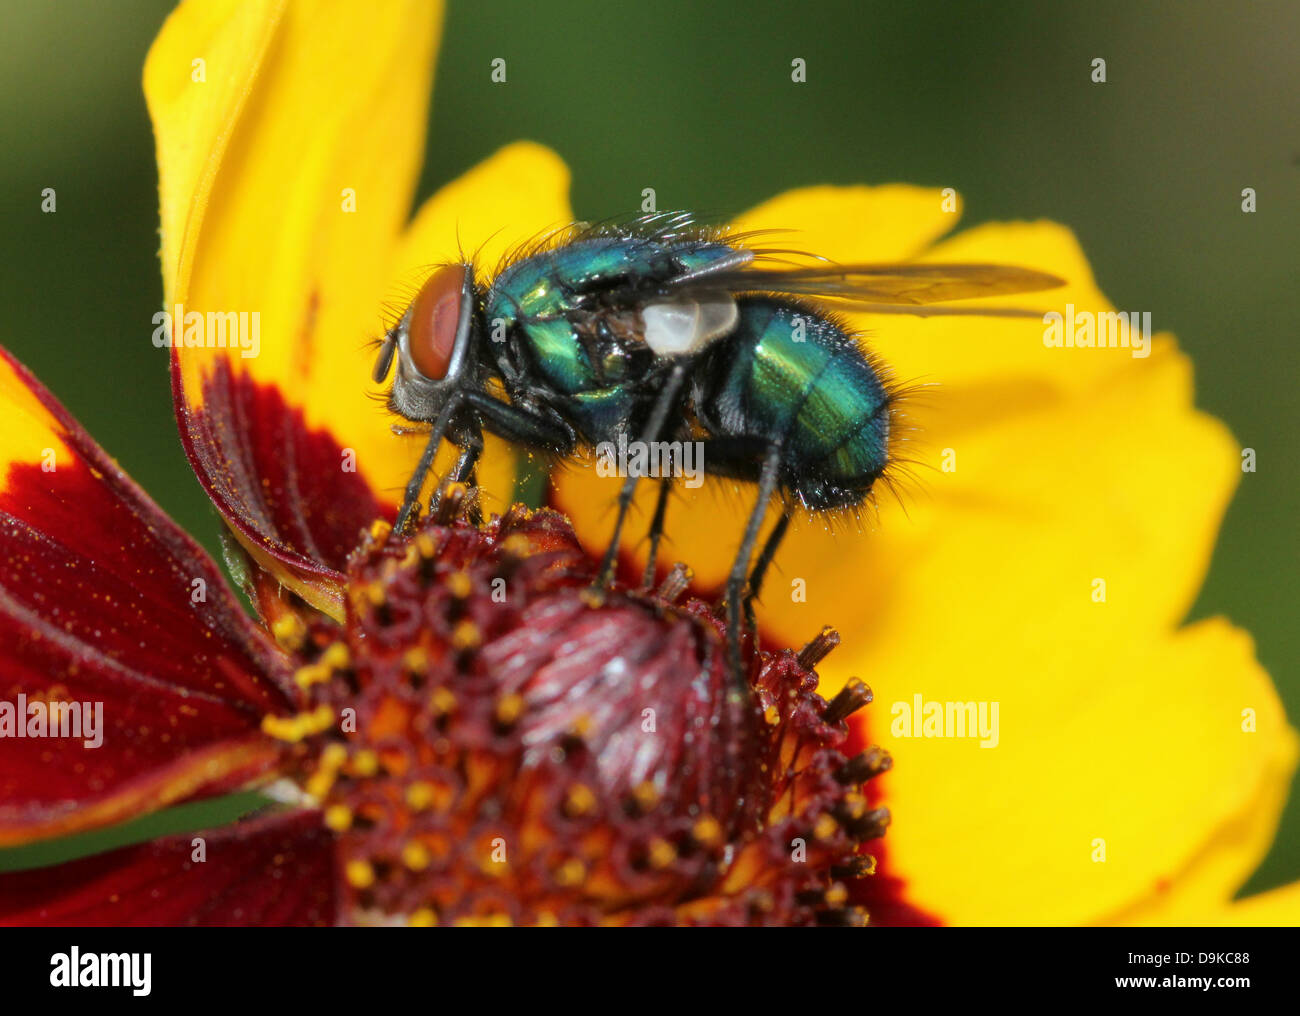 Macro of the Common green bottle fly (Phaenicia sericata, also Lucilia sericata) posing on a flower Stock Photo